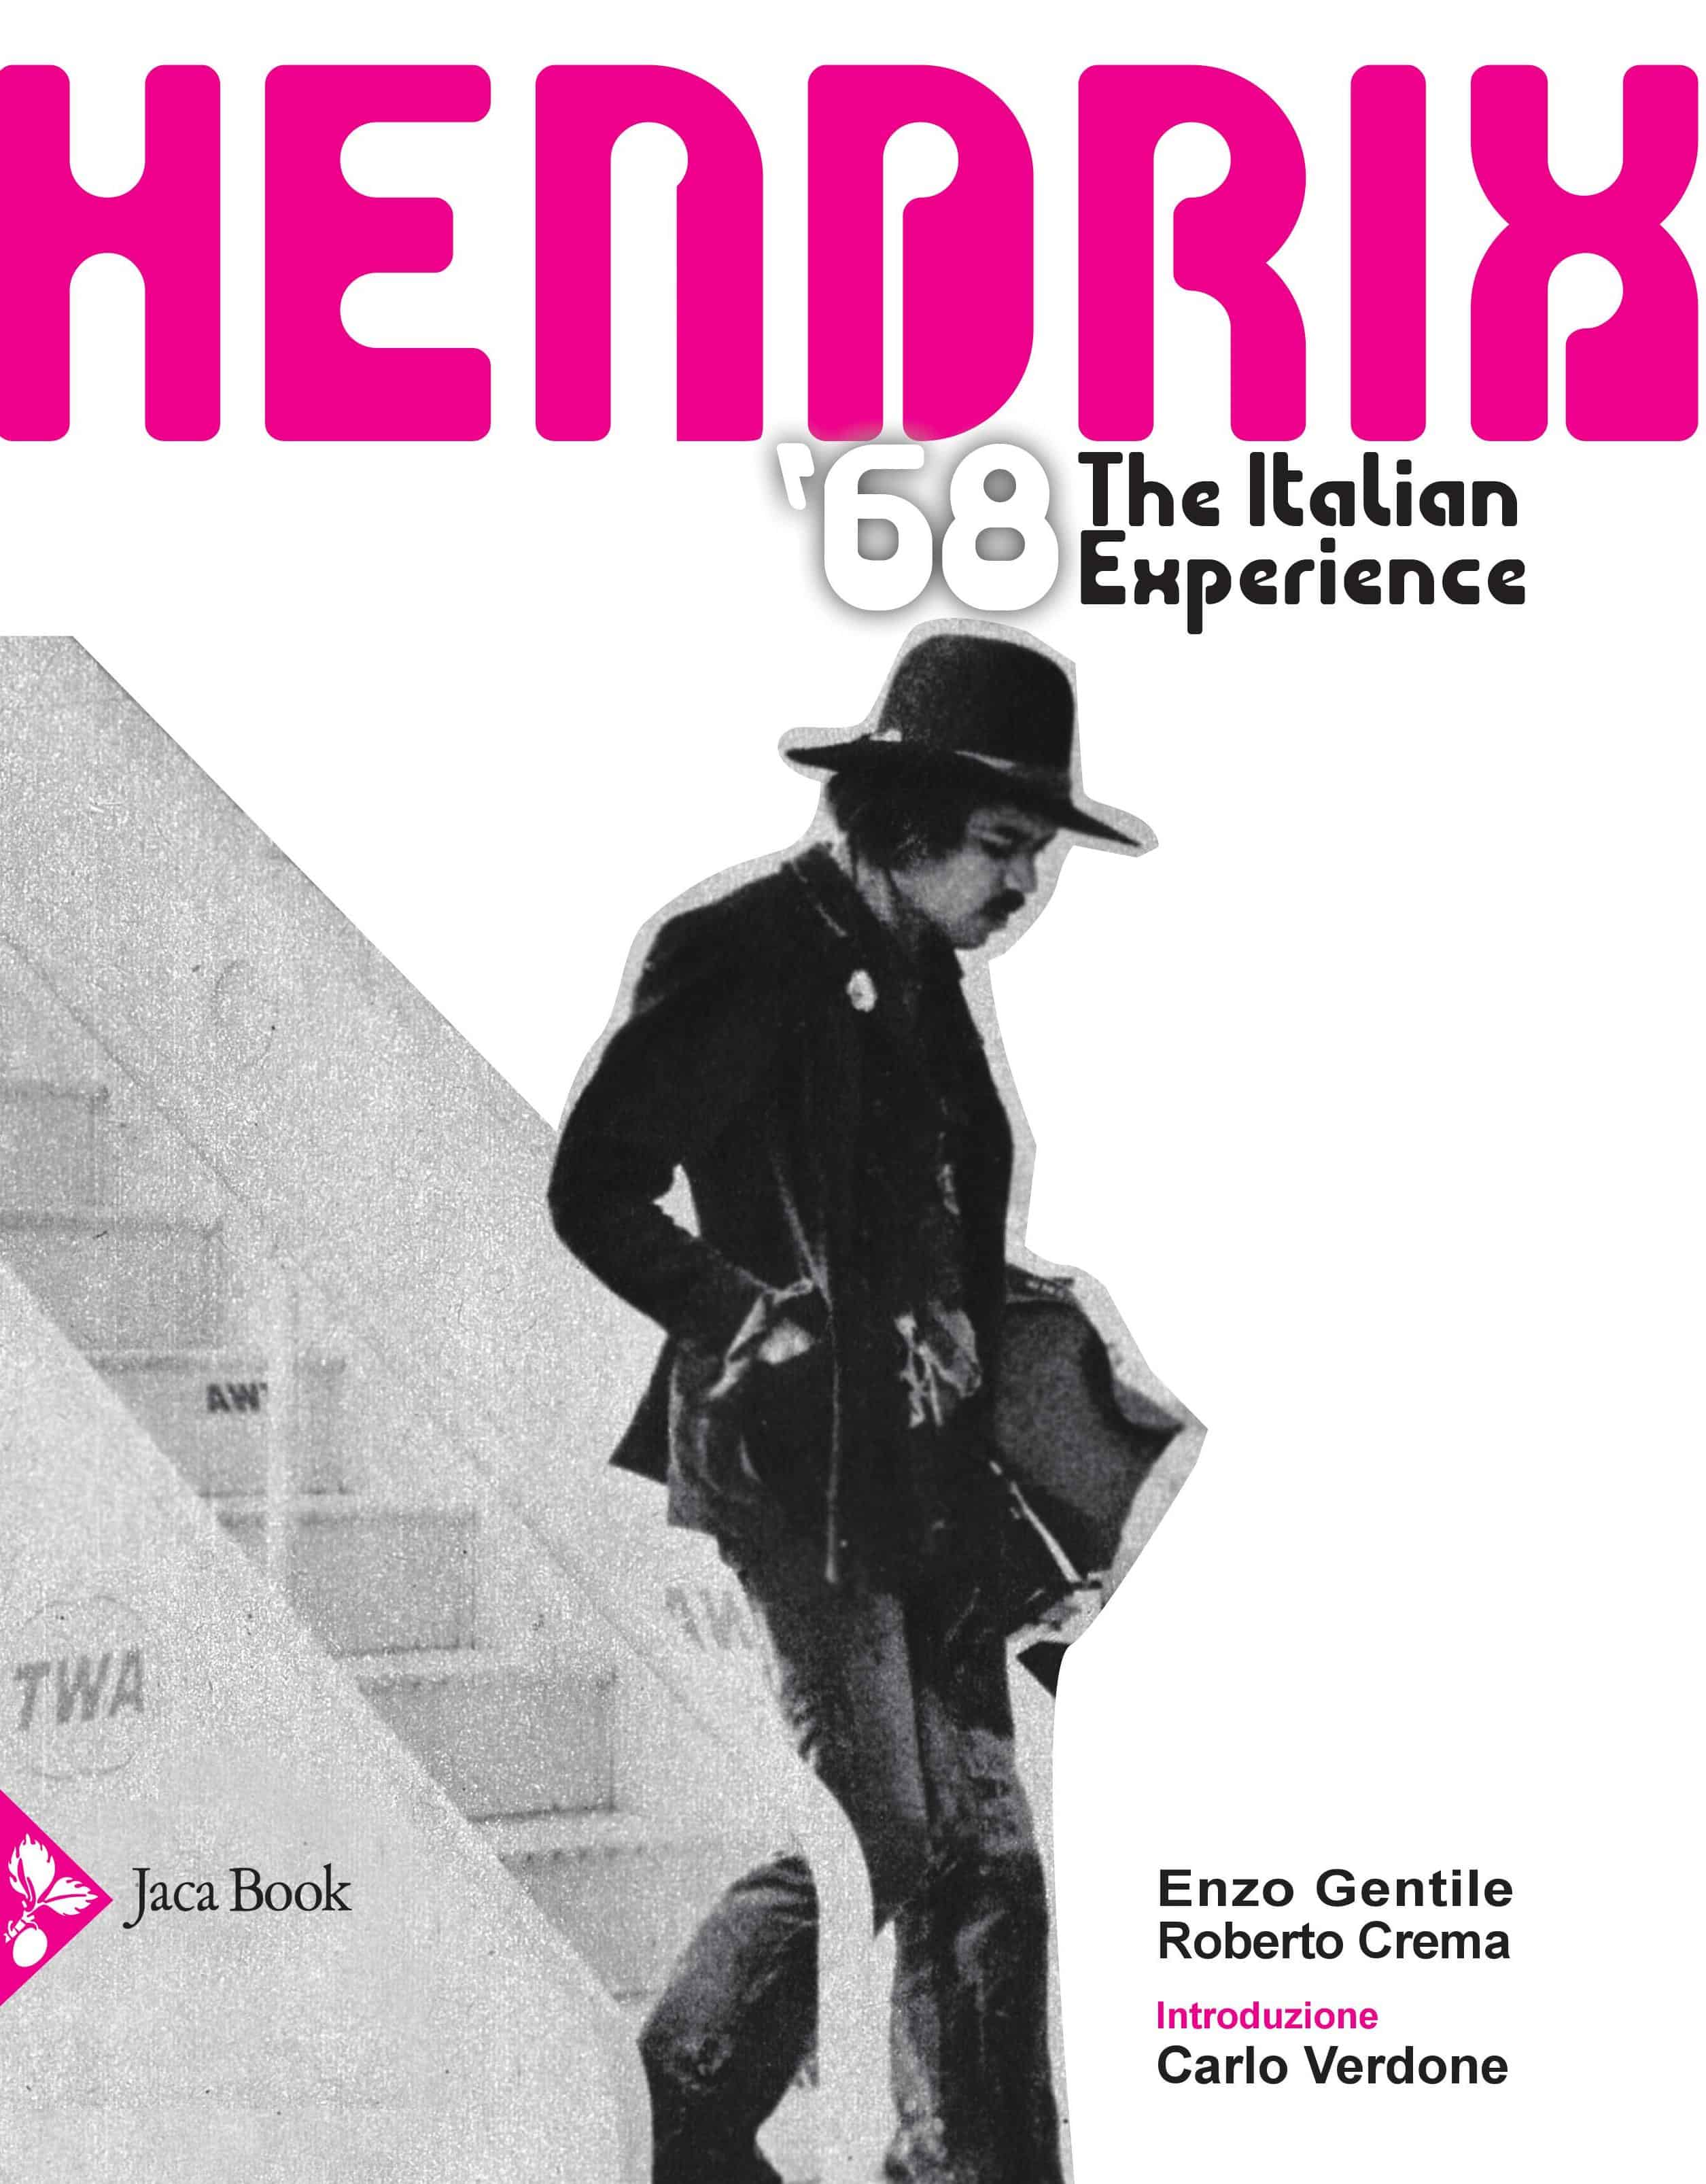 Roberto Crema e Enzo, Hendrix ‘68. The Italian Experience, Jaca Book